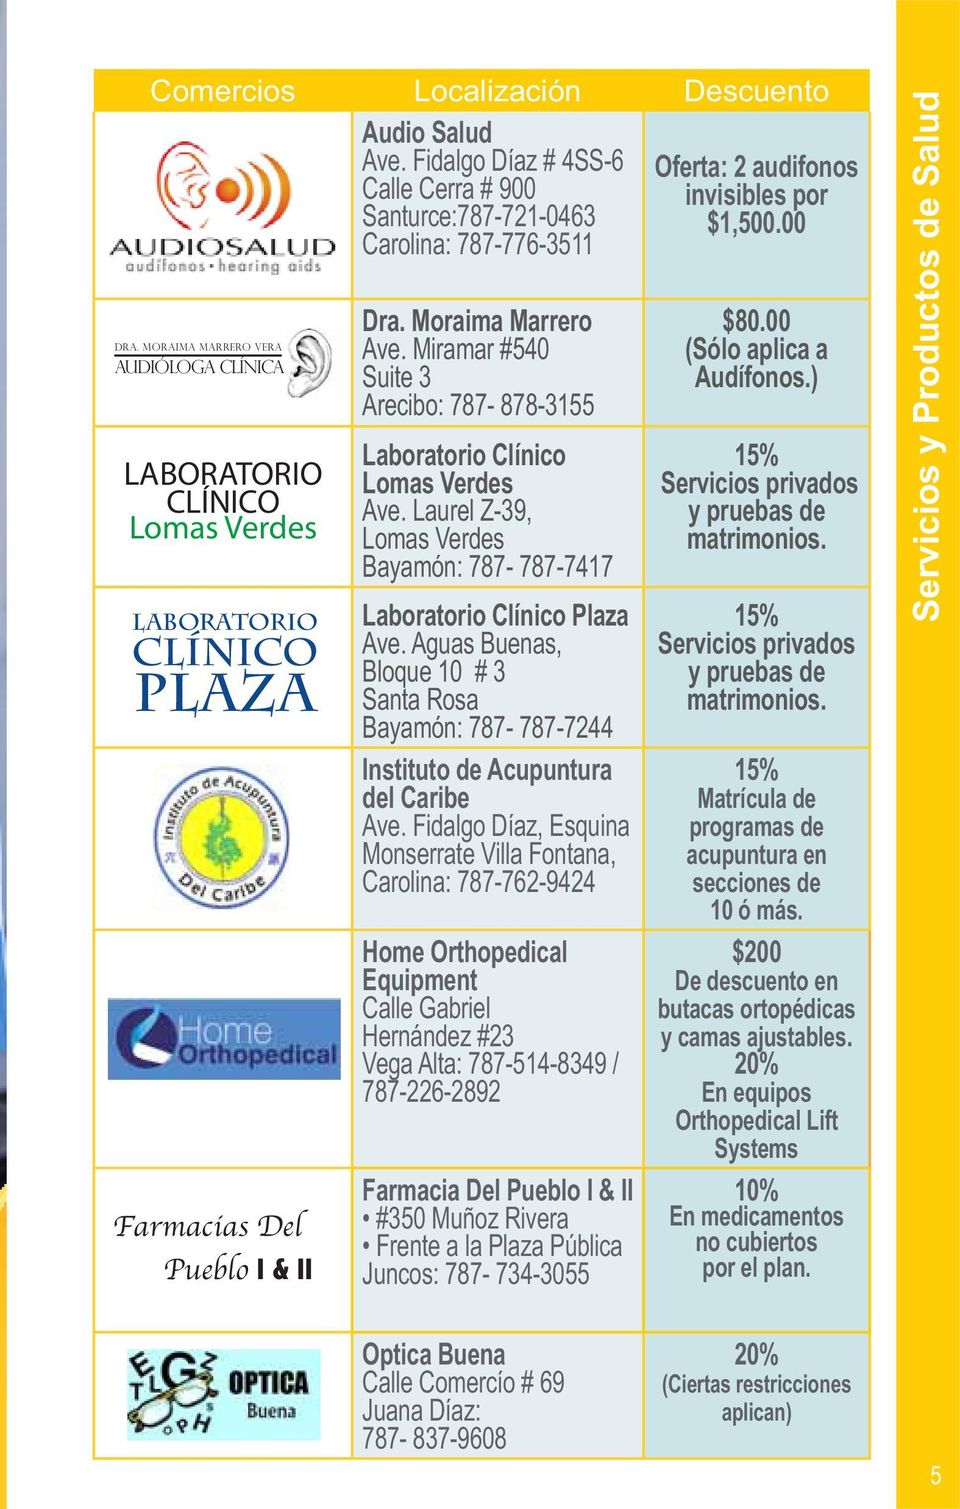 Miramar #540 Suite 3 Arecibo: 787-878-3155 Laboratorio Clínico Lomas Verdes Ave. Laurel Z-39, Lomas Verdes Bayamón: 787-787-7417 Laboratorio Clínico Plaza Ave.